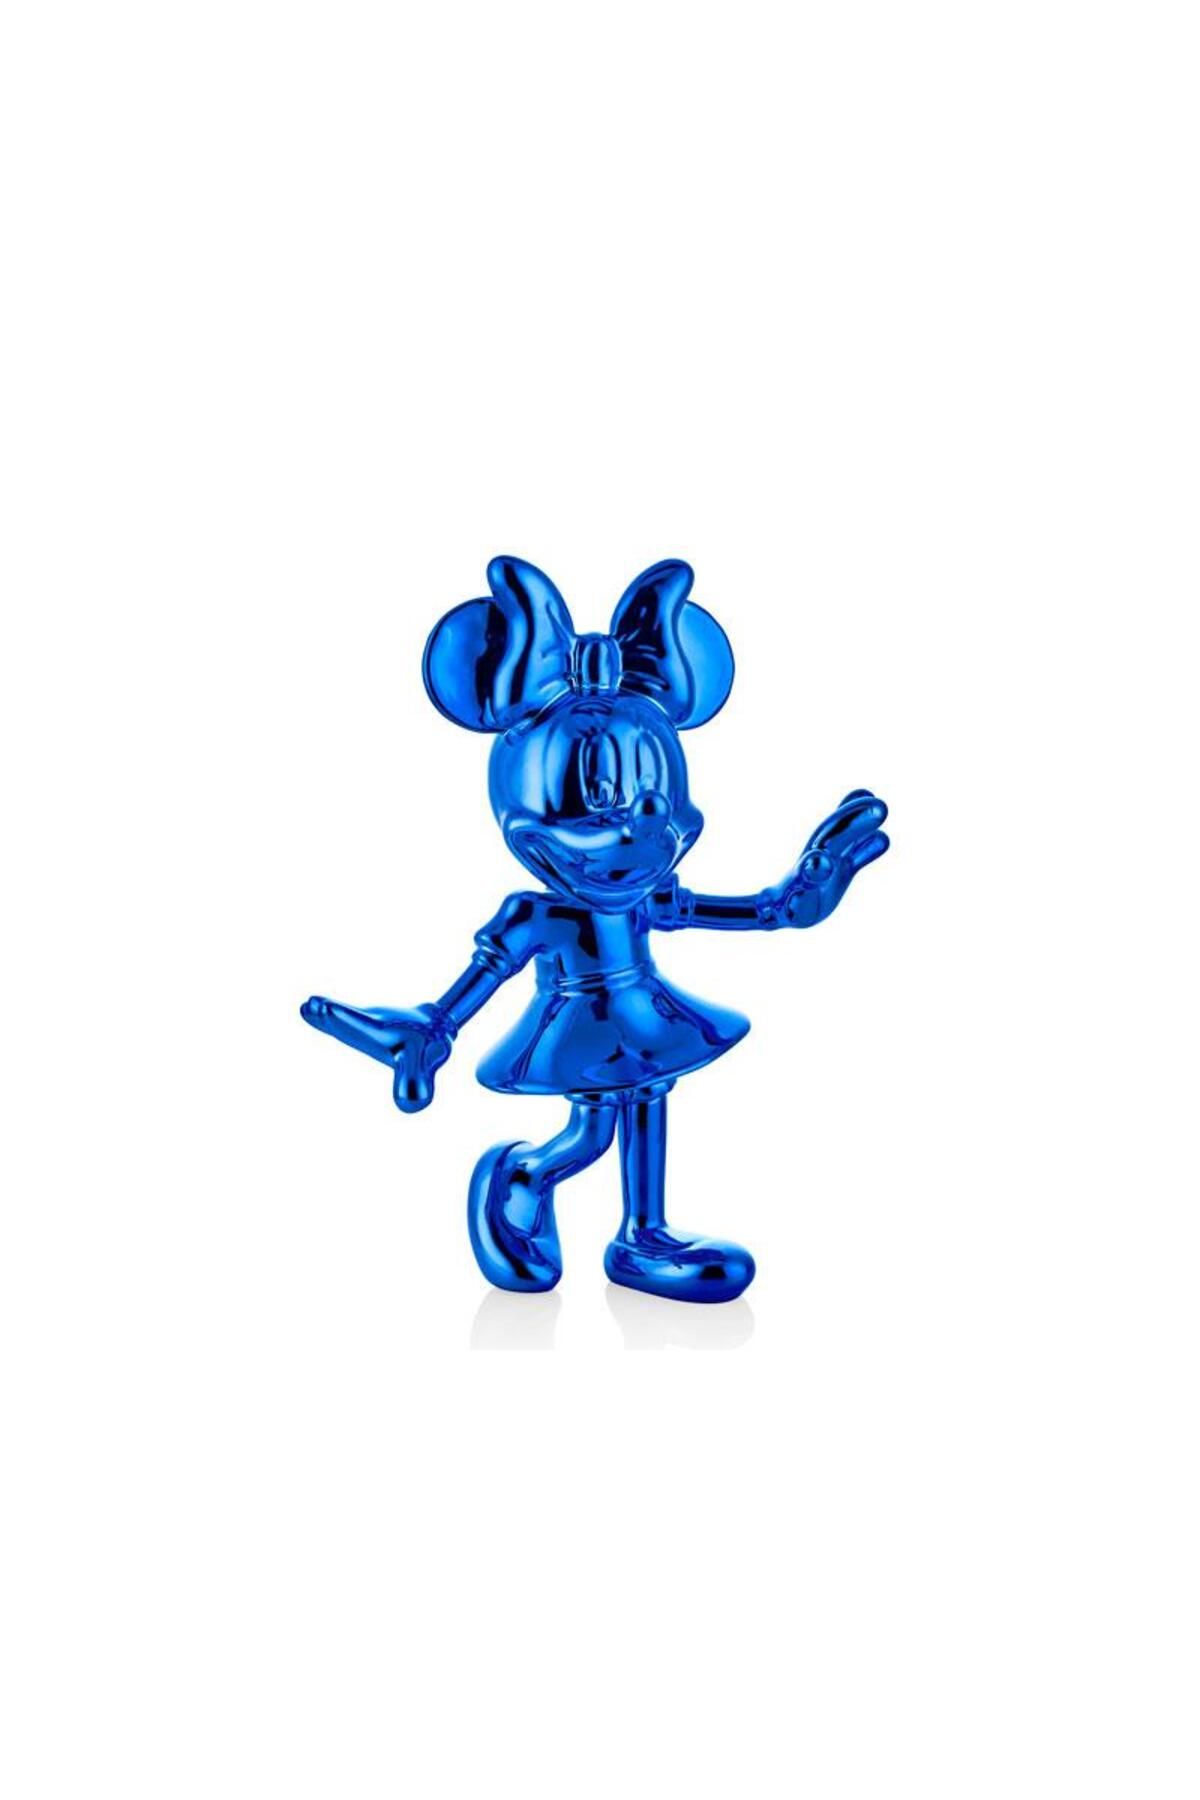 LAMEDORE Crearthome Minnie Mouse Blue Dekoratif Obje 25x12,5x29,5 cm 1DA-MINB